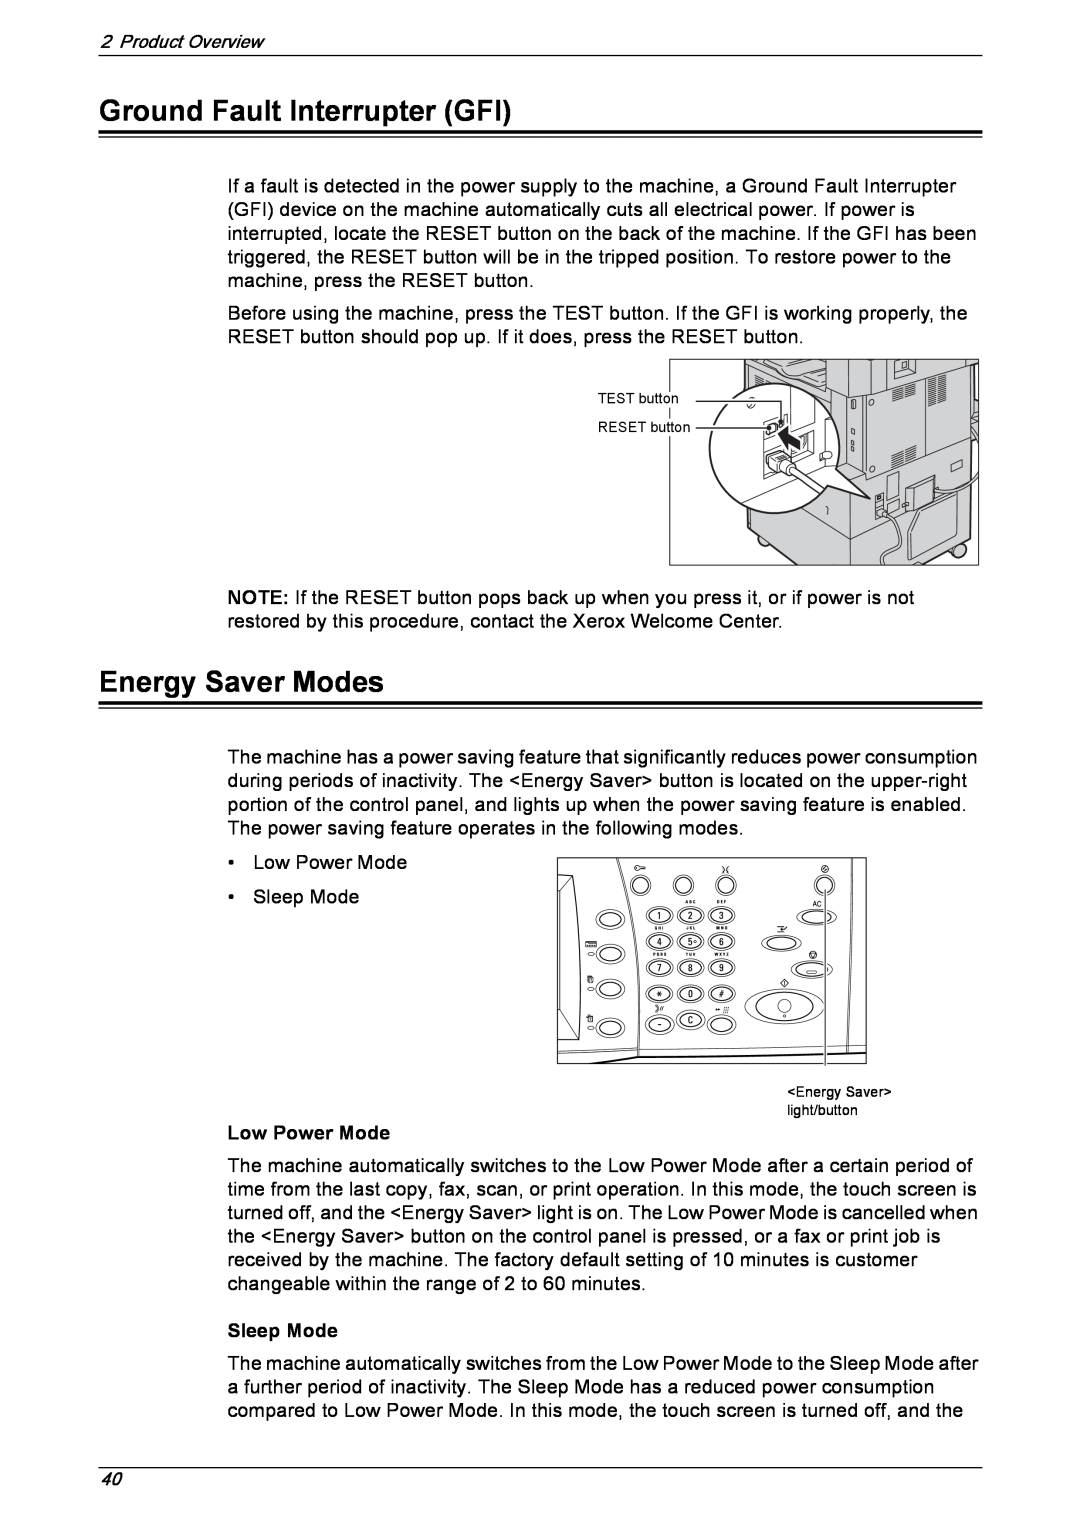 Xerox 5230 manual Ground Fault Interrupter GFI, Energy Saver Modes, Low Power Mode, Sleep Mode 